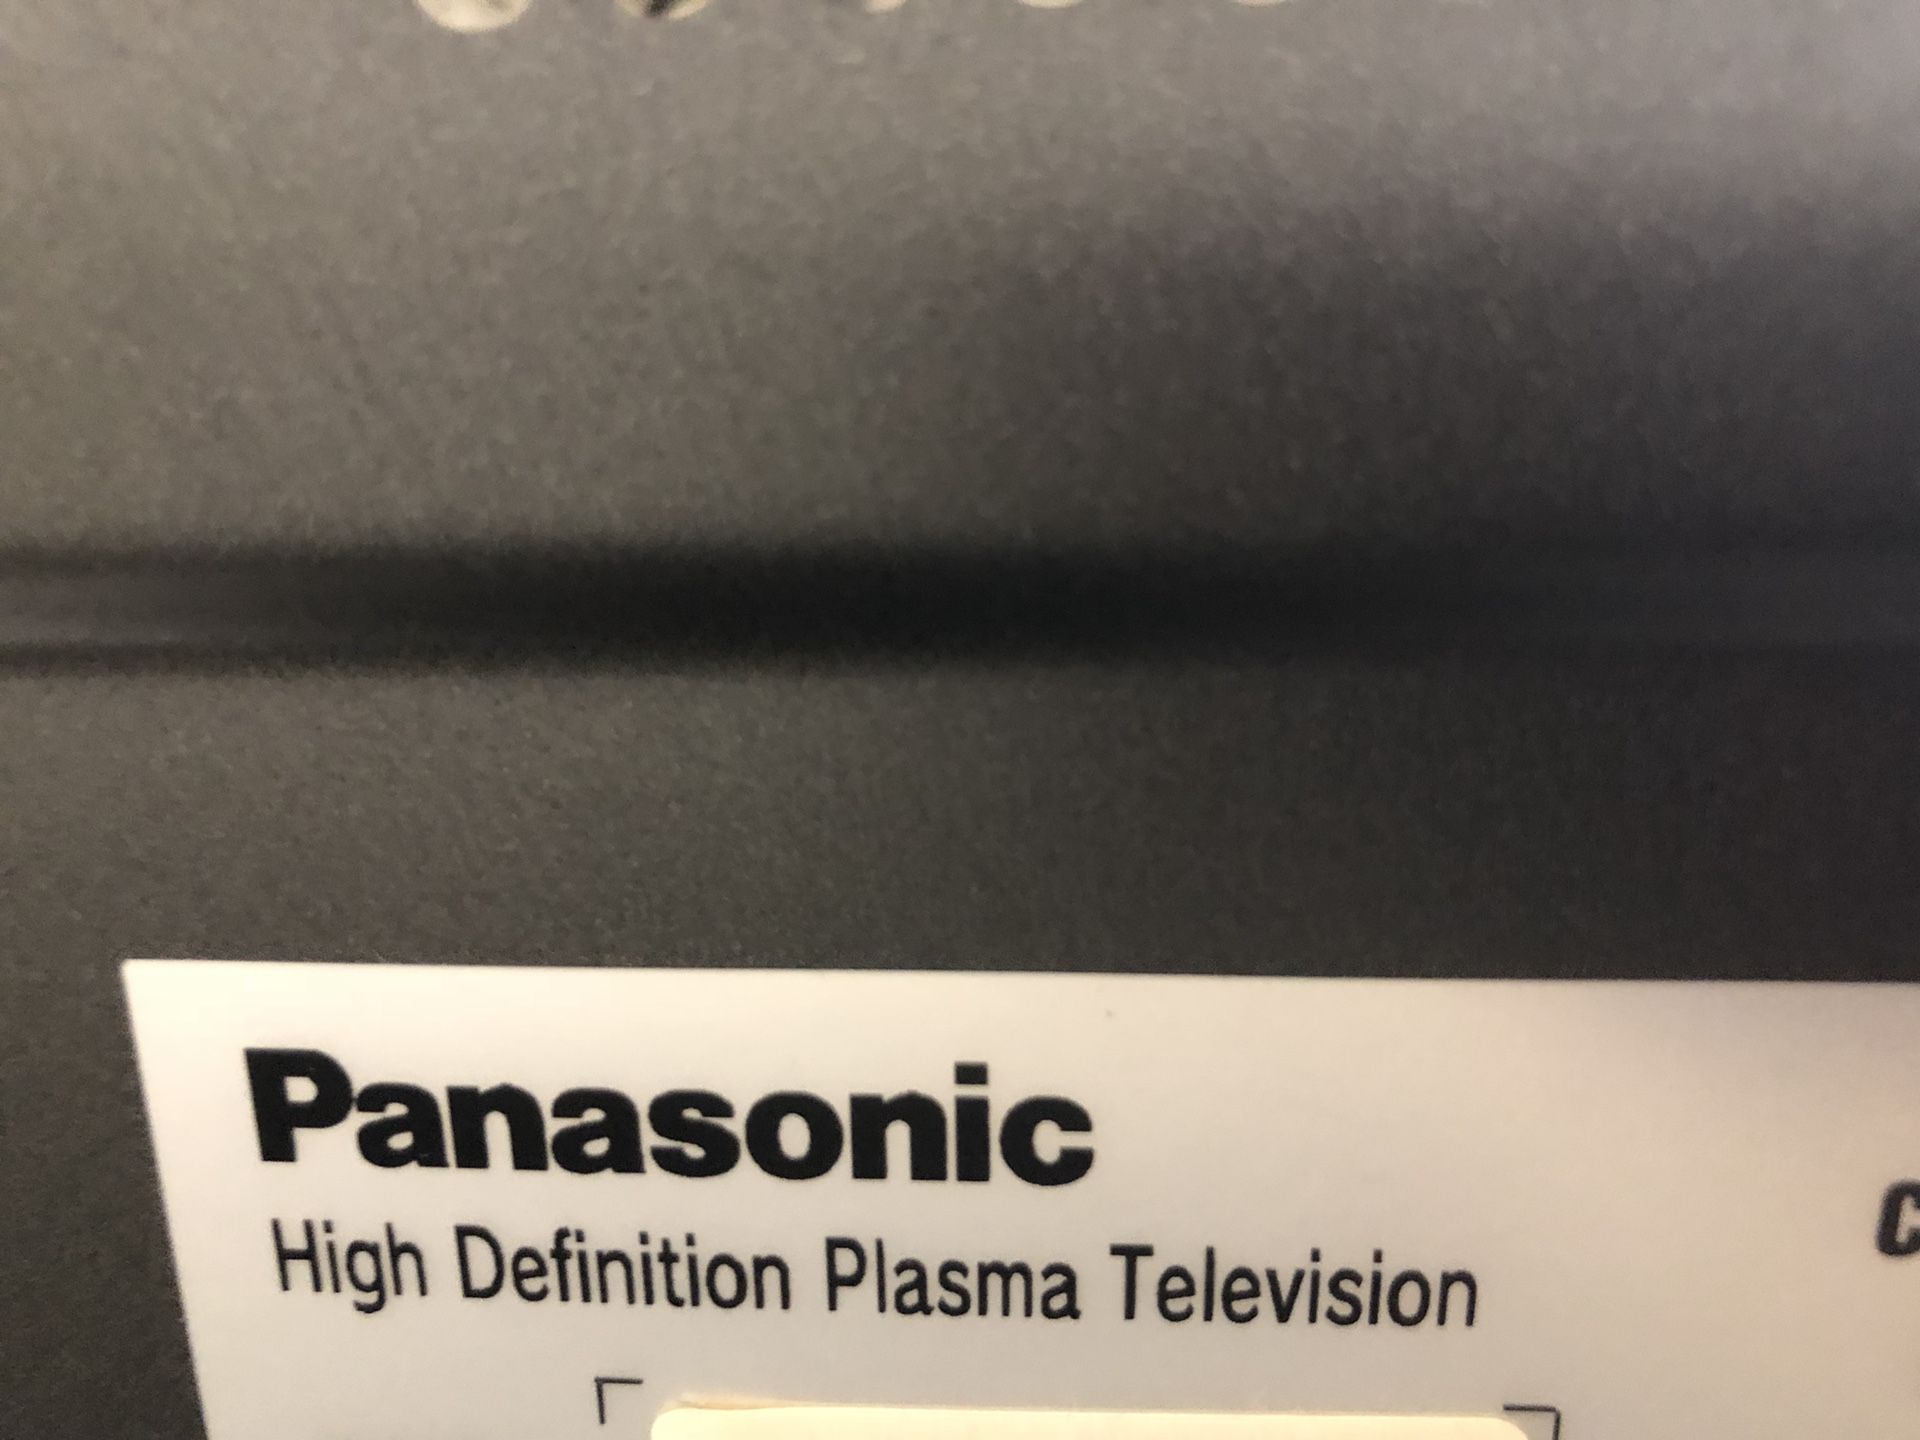 Panasonic high definition plasma tv